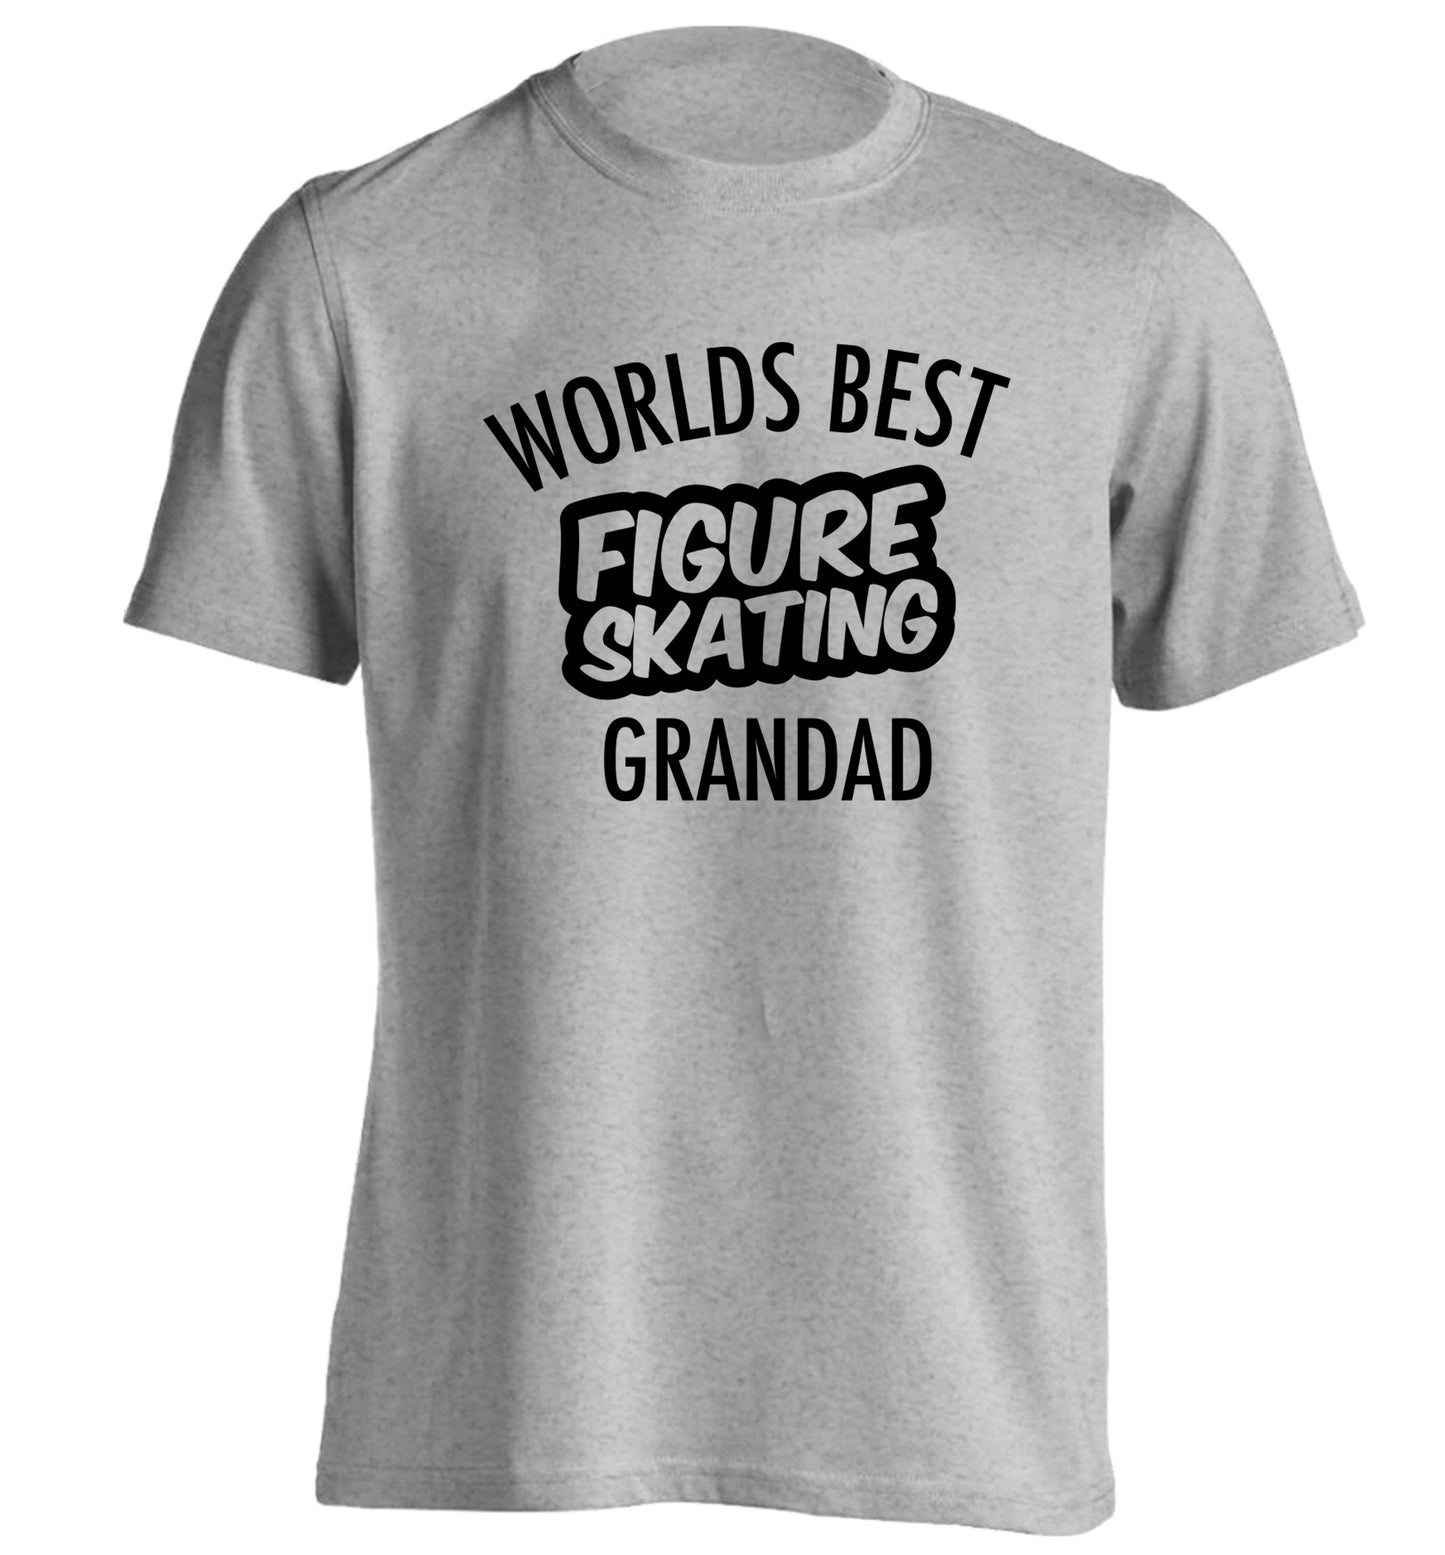 Worlds best figure skating grandad adults unisexgrey Tshirt 2XL